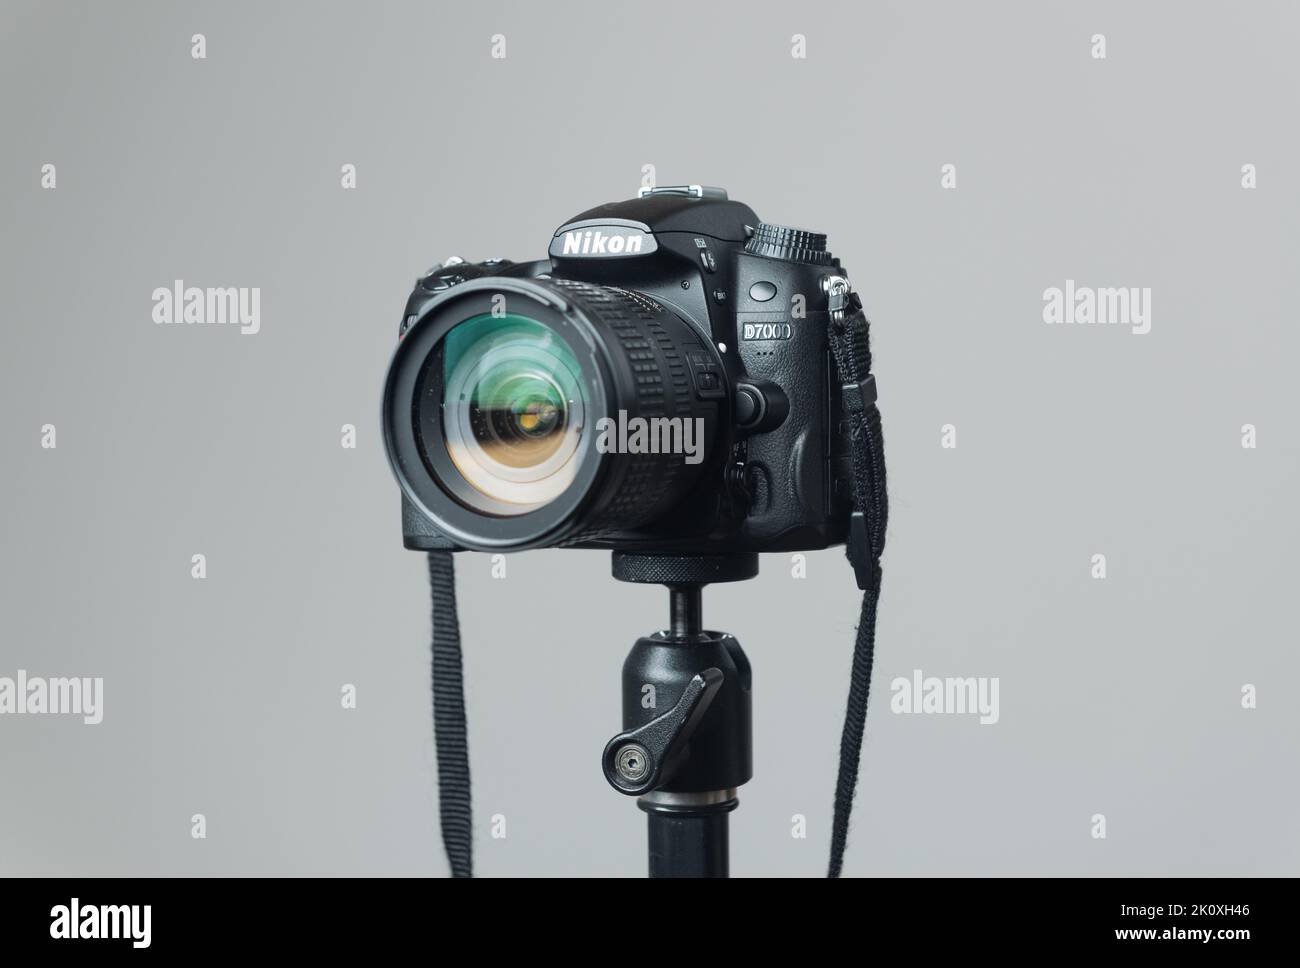 Nikon DSLR D7000 digital camera on a tripod Stock Photo